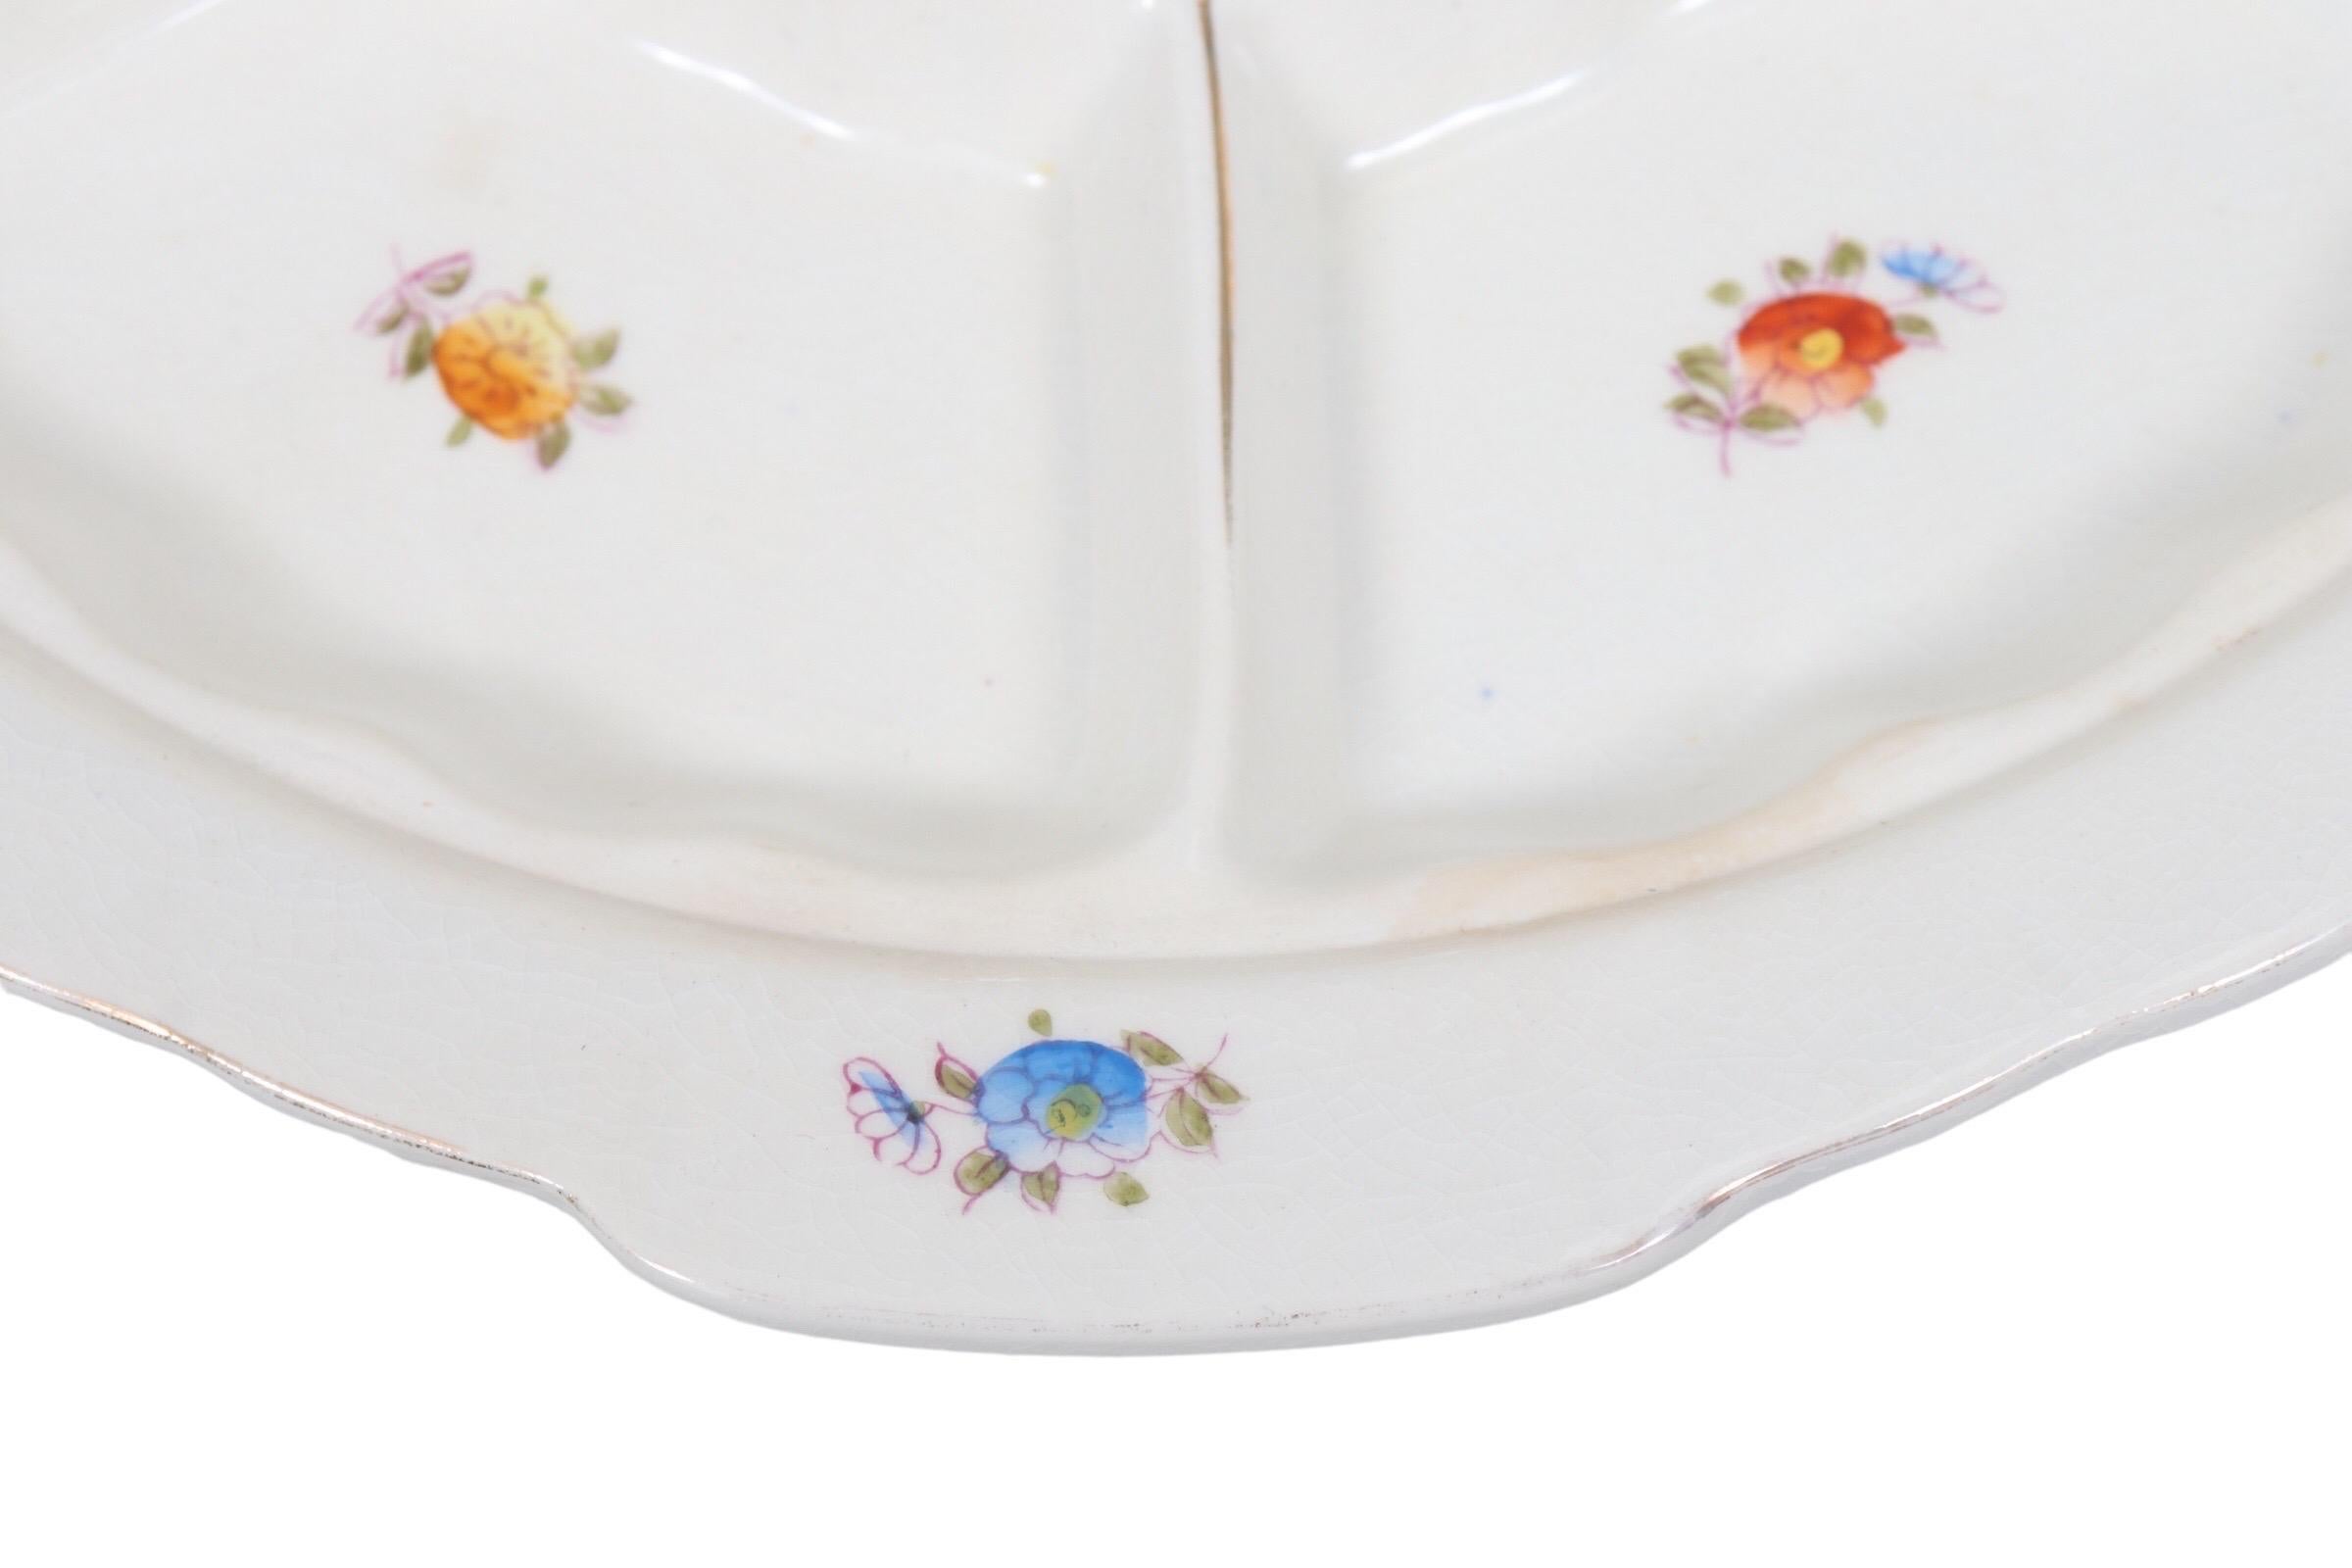 Mikori Ware Japanese Lidded Ceramic Serving Dish In Good Condition For Sale In Bradenton, FL